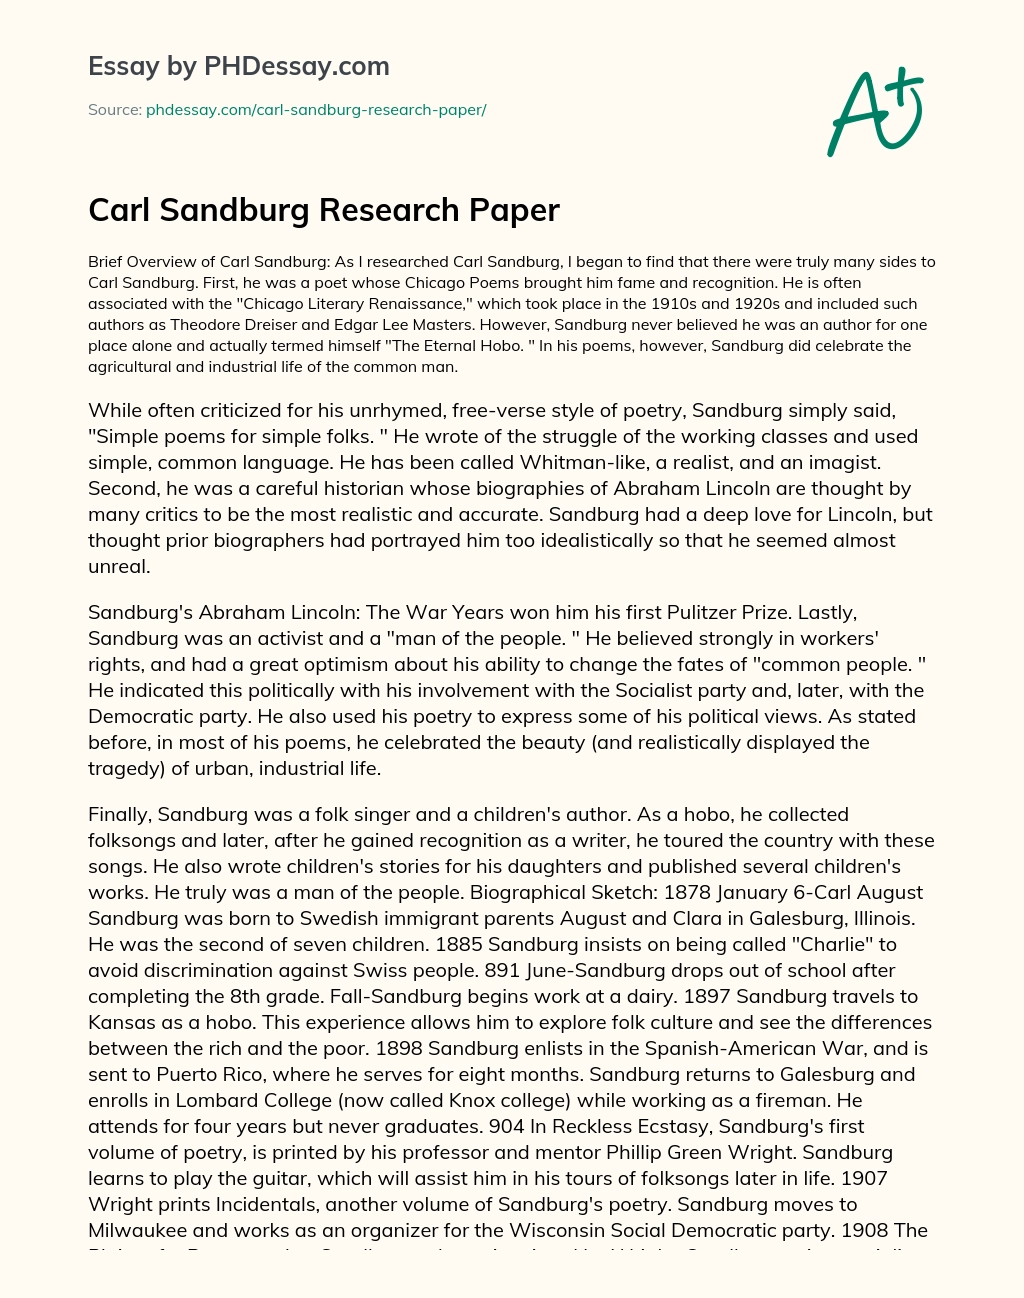 Carl Sandburg essay